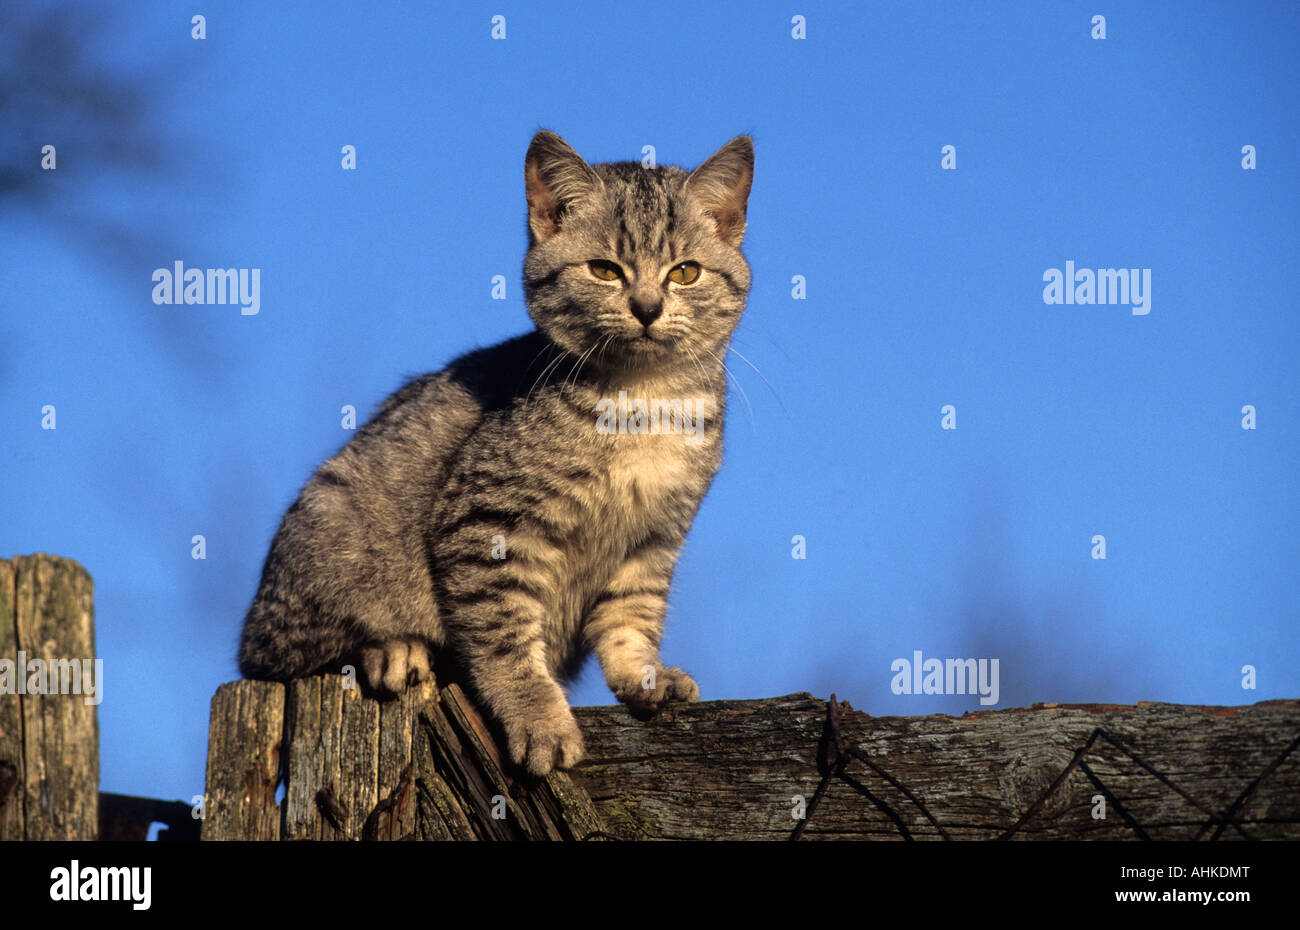 getigerte Hauskatze Jungtier draussen auf Holzzaun sitzend tabby cat domestic kitten outdoor sitting on wooden fence Stock Photo